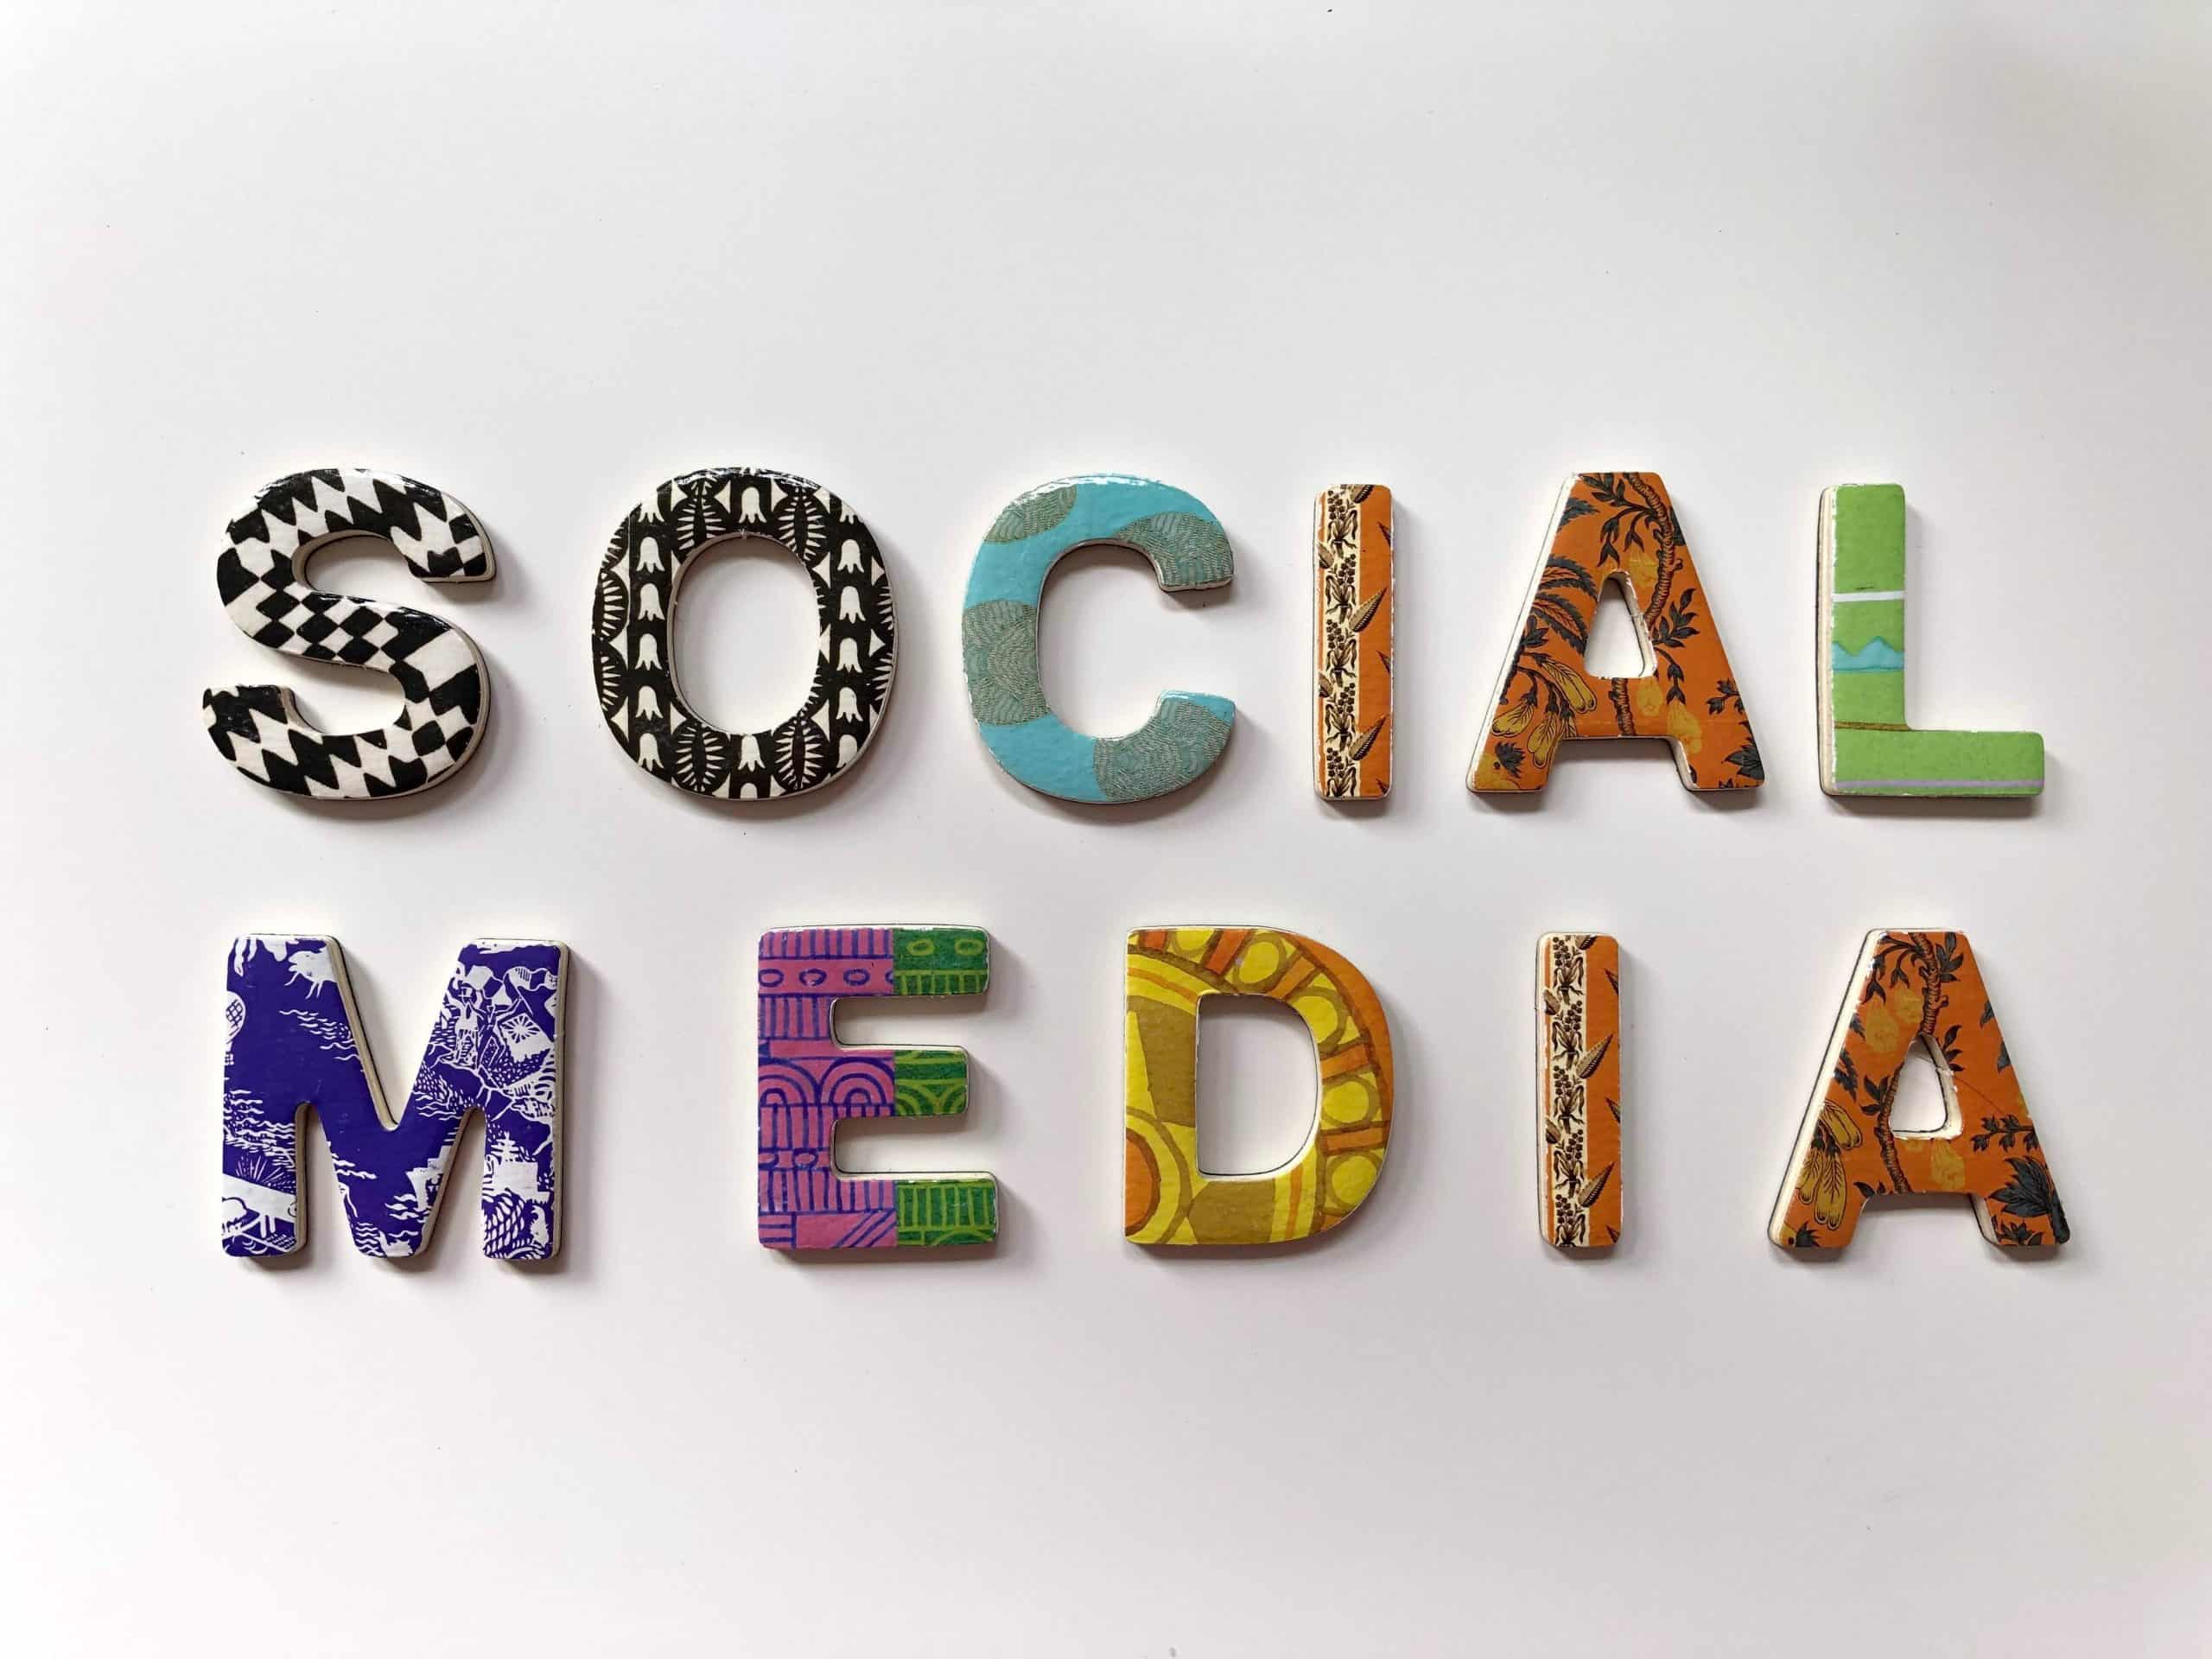 14 Hidden Benefits of Social Media Marketing for Business